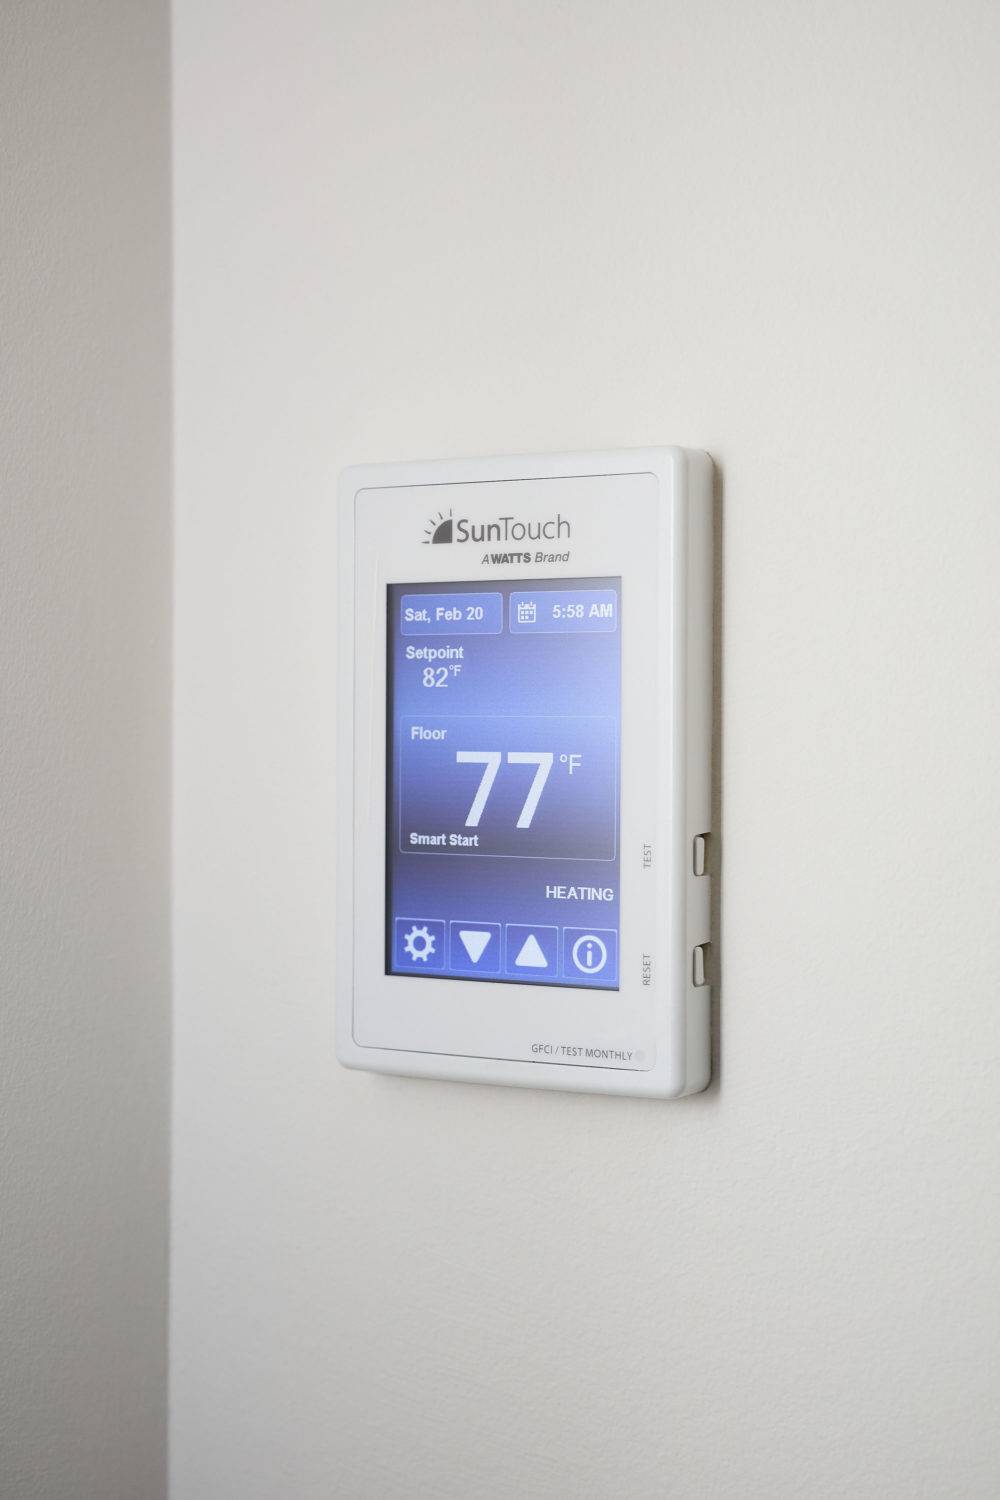 SunTouch heated floors programmable thermostat display